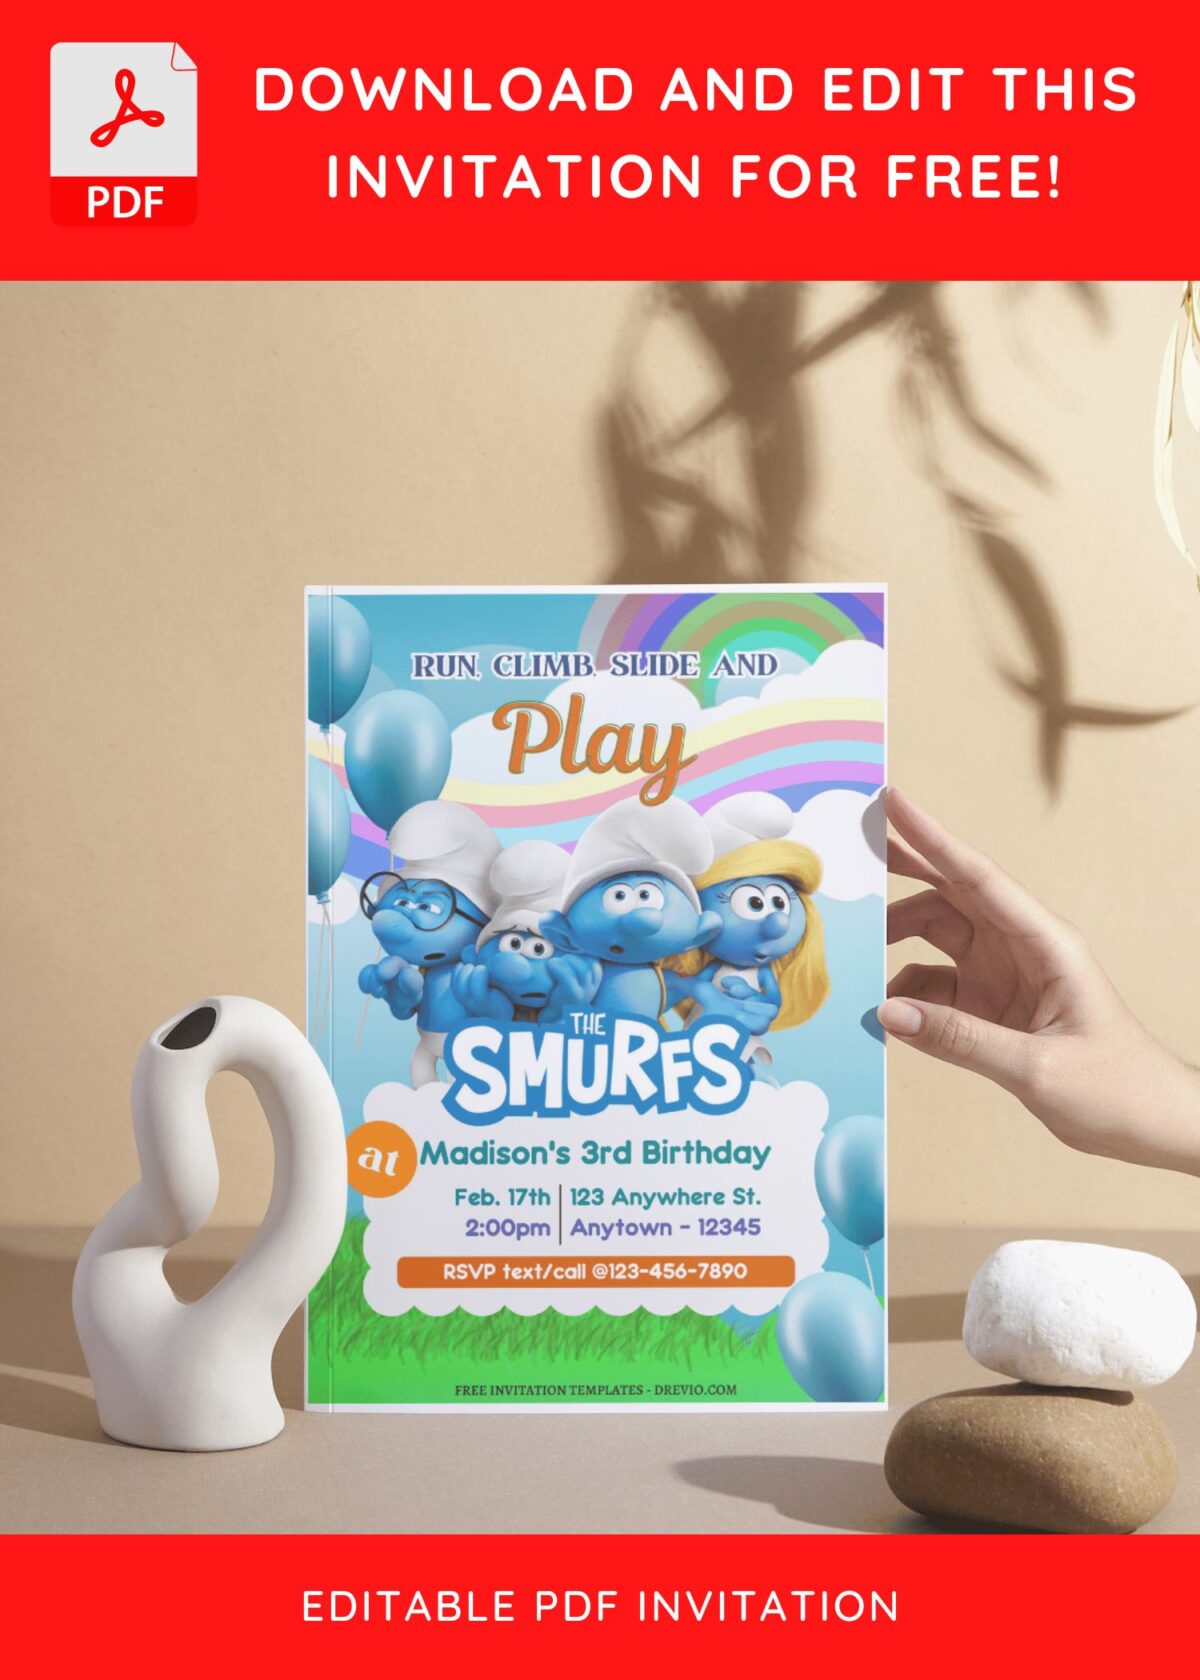 (Free Editable PDF) Smurftastic Smurfs Birthday Invitation Templates with Clumsy Smurfs